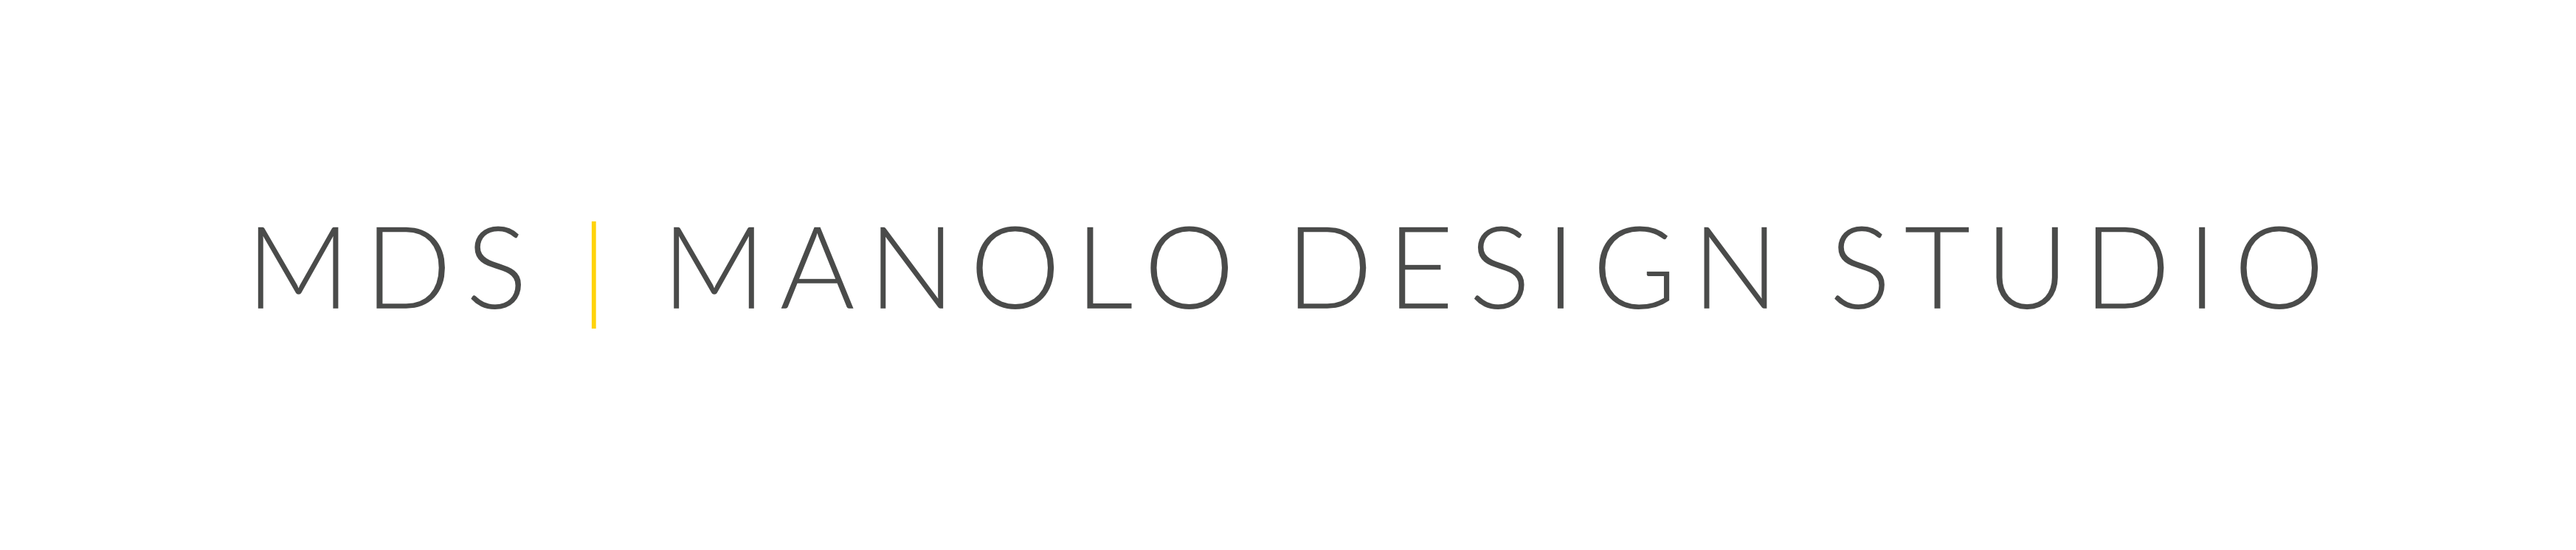 Manolo Design Studio